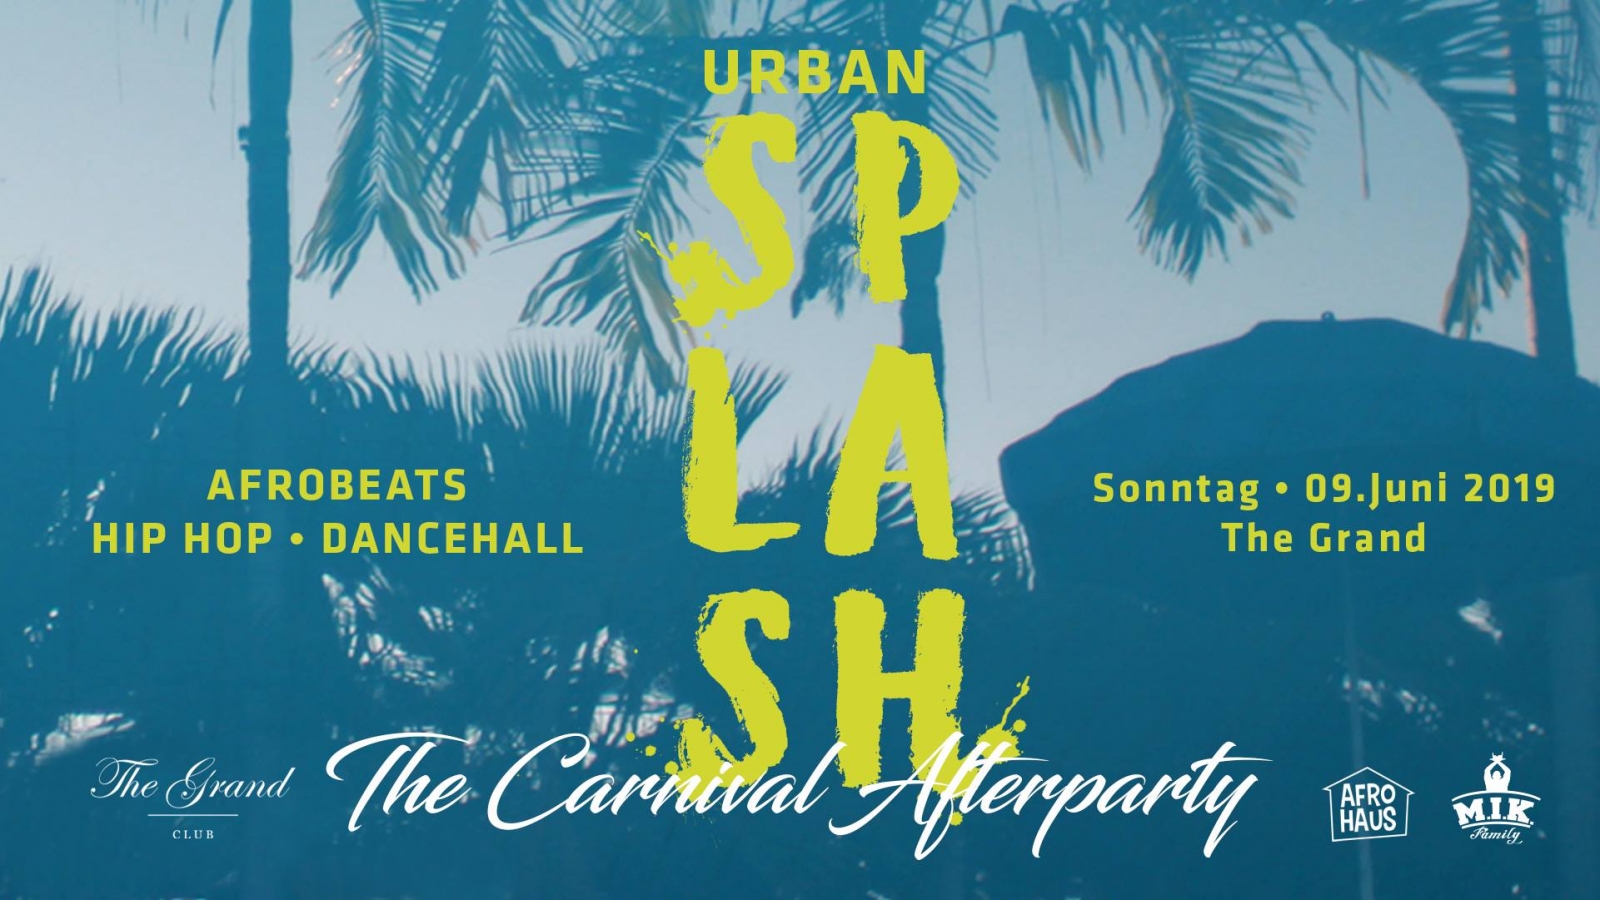 Urban Splash Carnival - The Berlin Karneval Afterparty 2019 poster